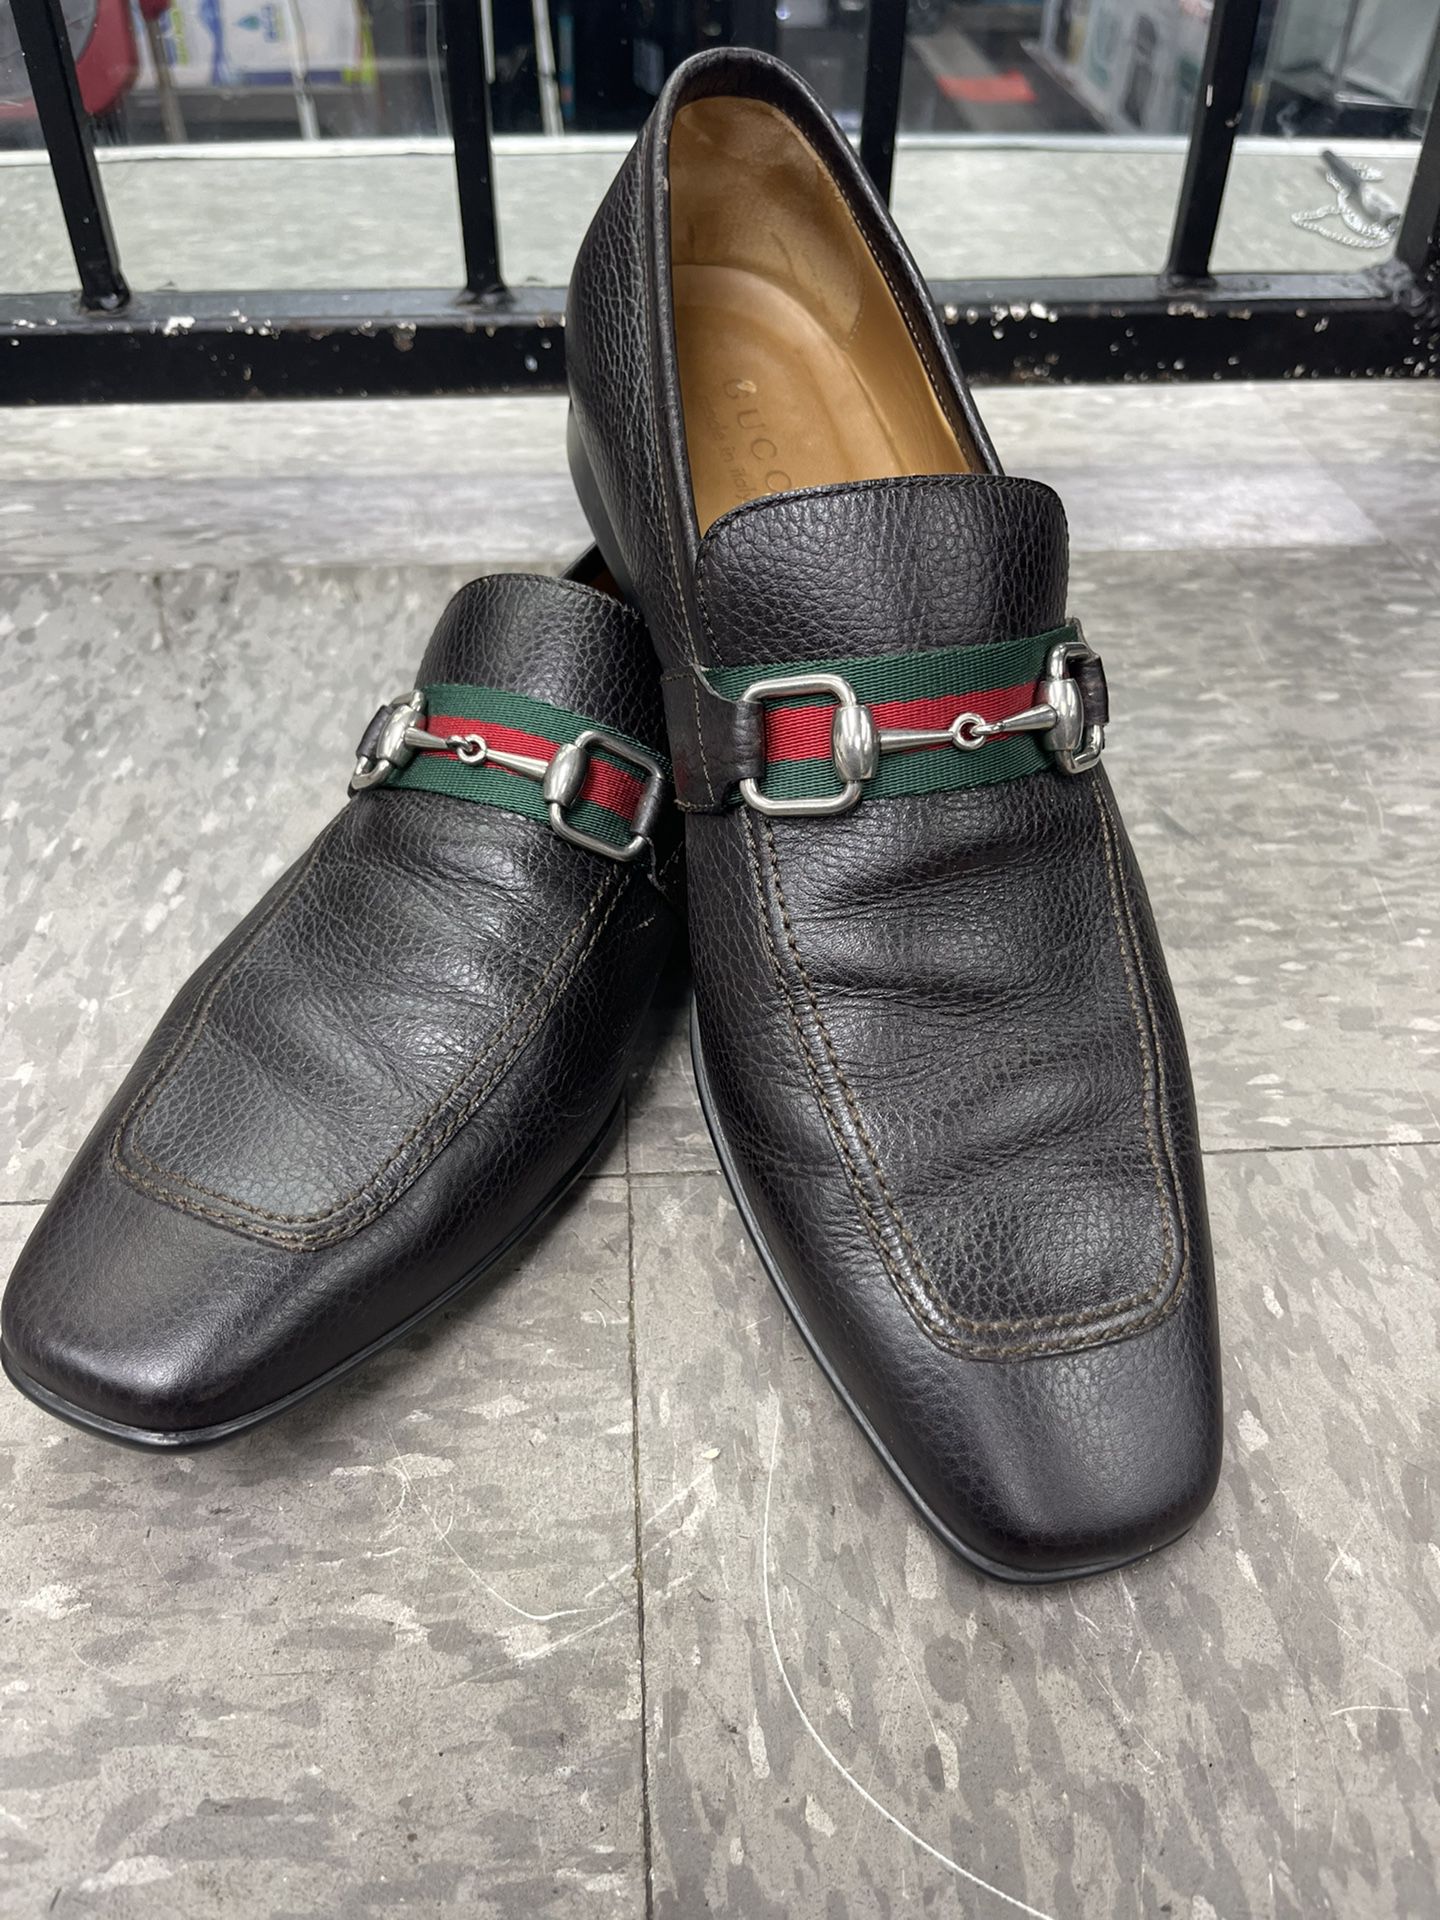 bølge kaskade Periodisk Men's Black Gucci Loafers for Sale in Oakland Park, FL - OfferUp